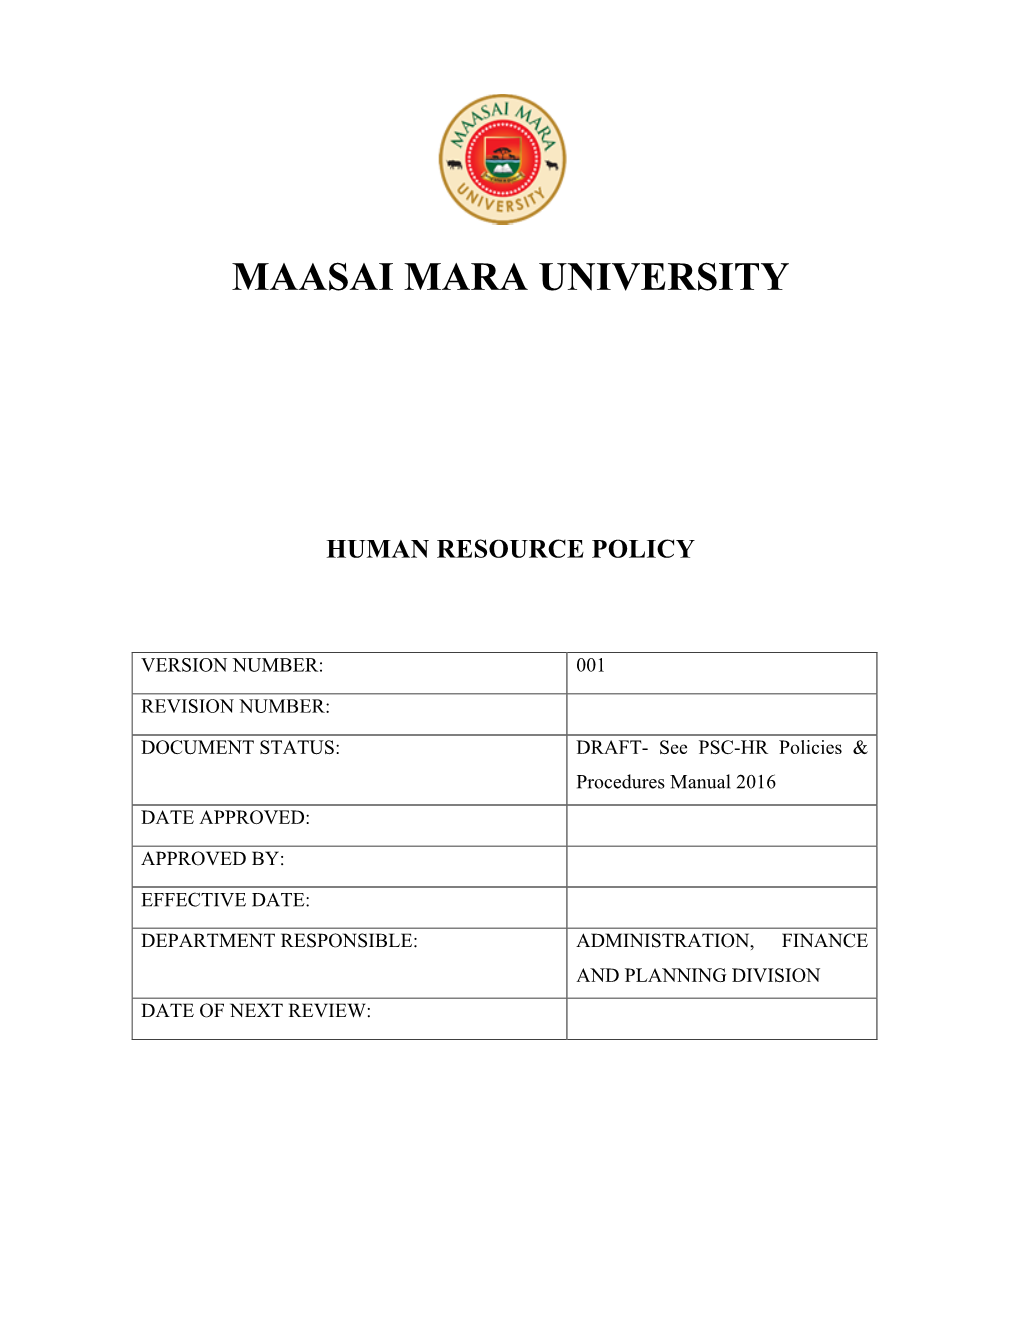 Human Resource Policy for MMARAU